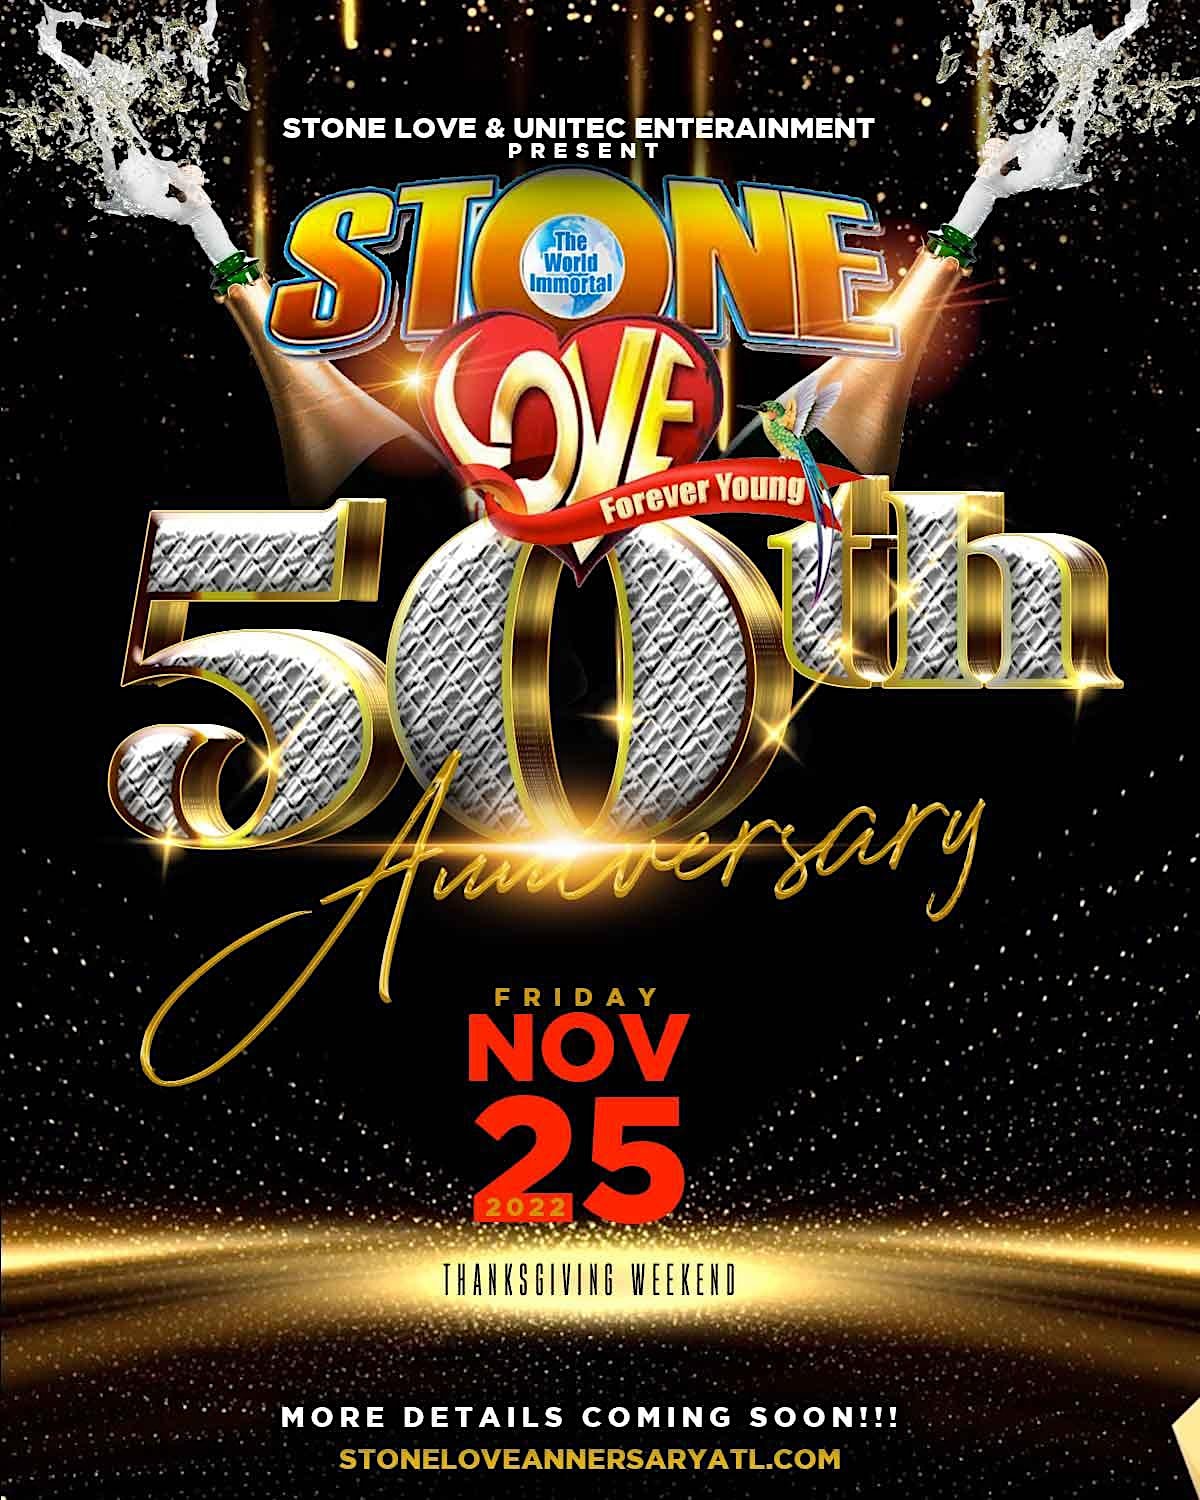 Stone Love 50th Anniversary Celebration- Atlanta
Fri Nov 25, 10:00 PM - Sat Nov 26, 4:00 AM
in 39 days